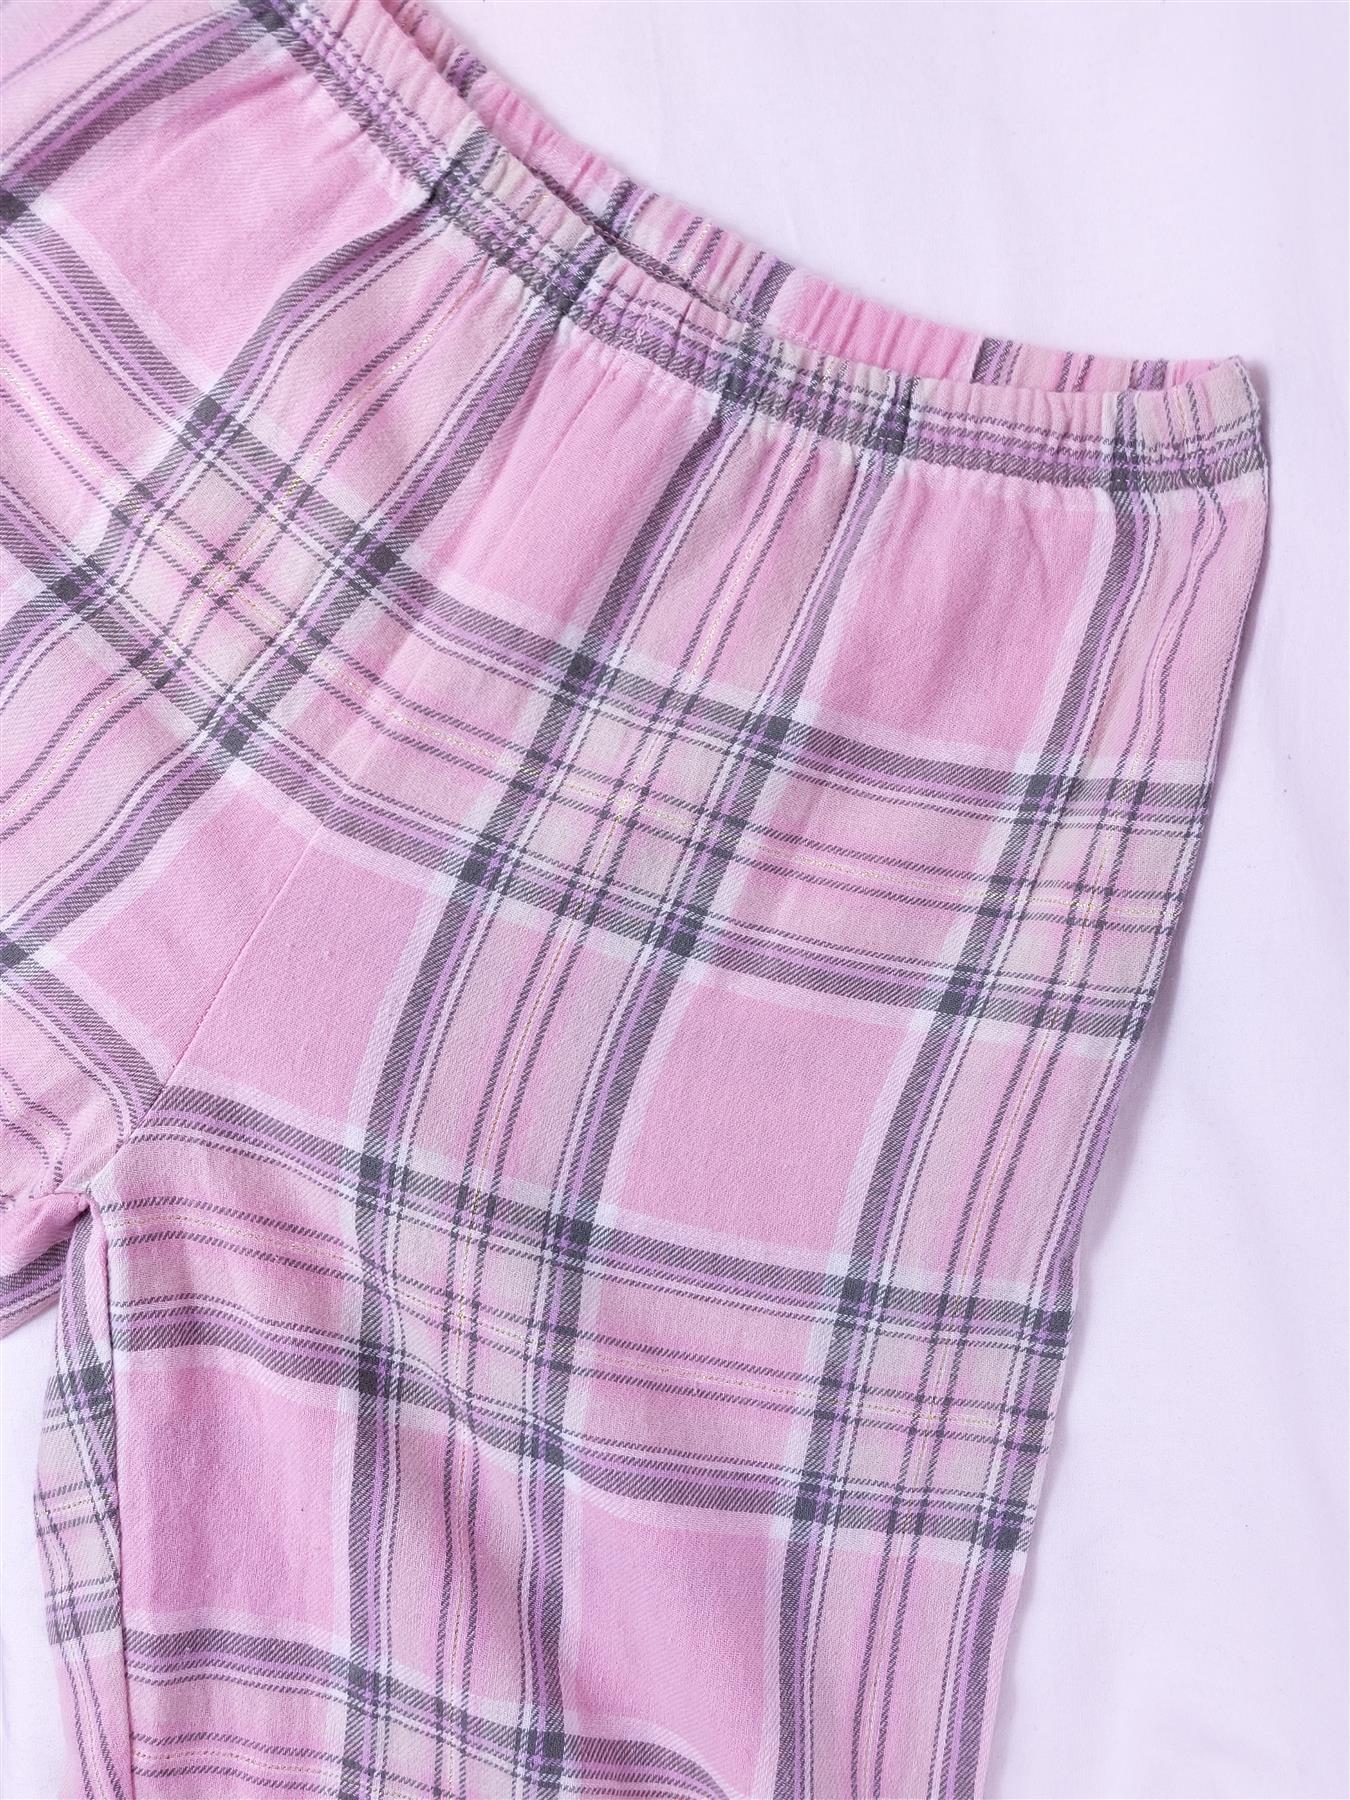 Women's Cotton Pyjama Bottoms Pink Check Sparkly Thread Soft Comfy PJ Pants 8-24